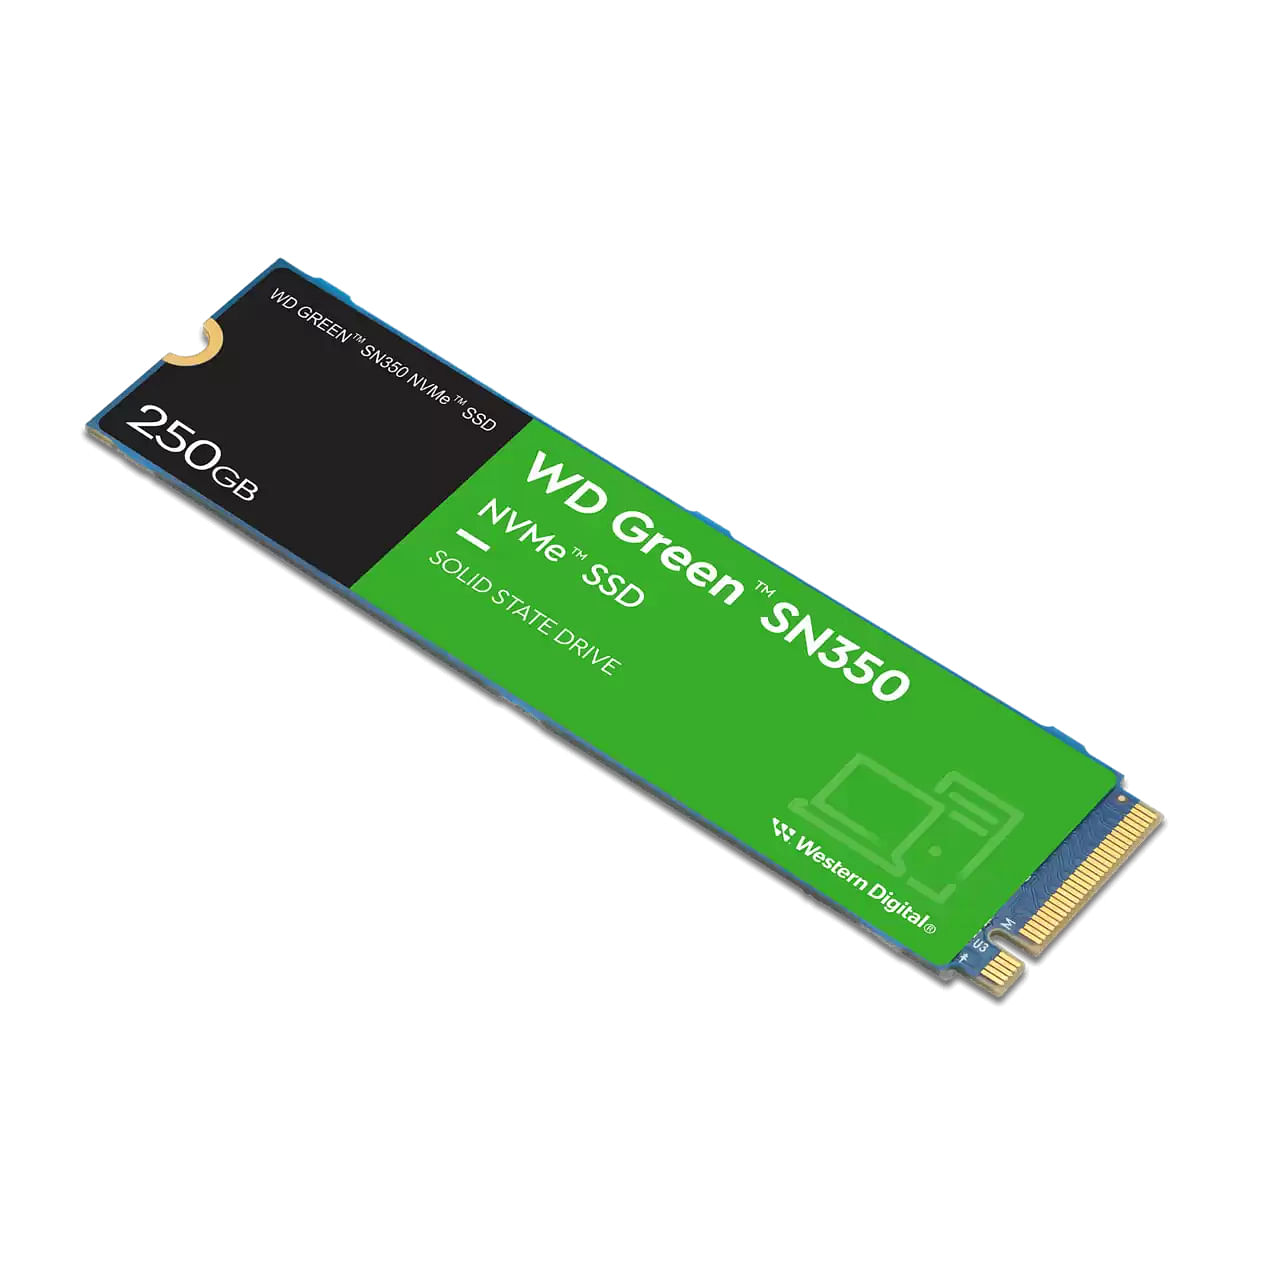 WD Green SN350 500GB M.2 NVMe PCIe 3.0 SSD